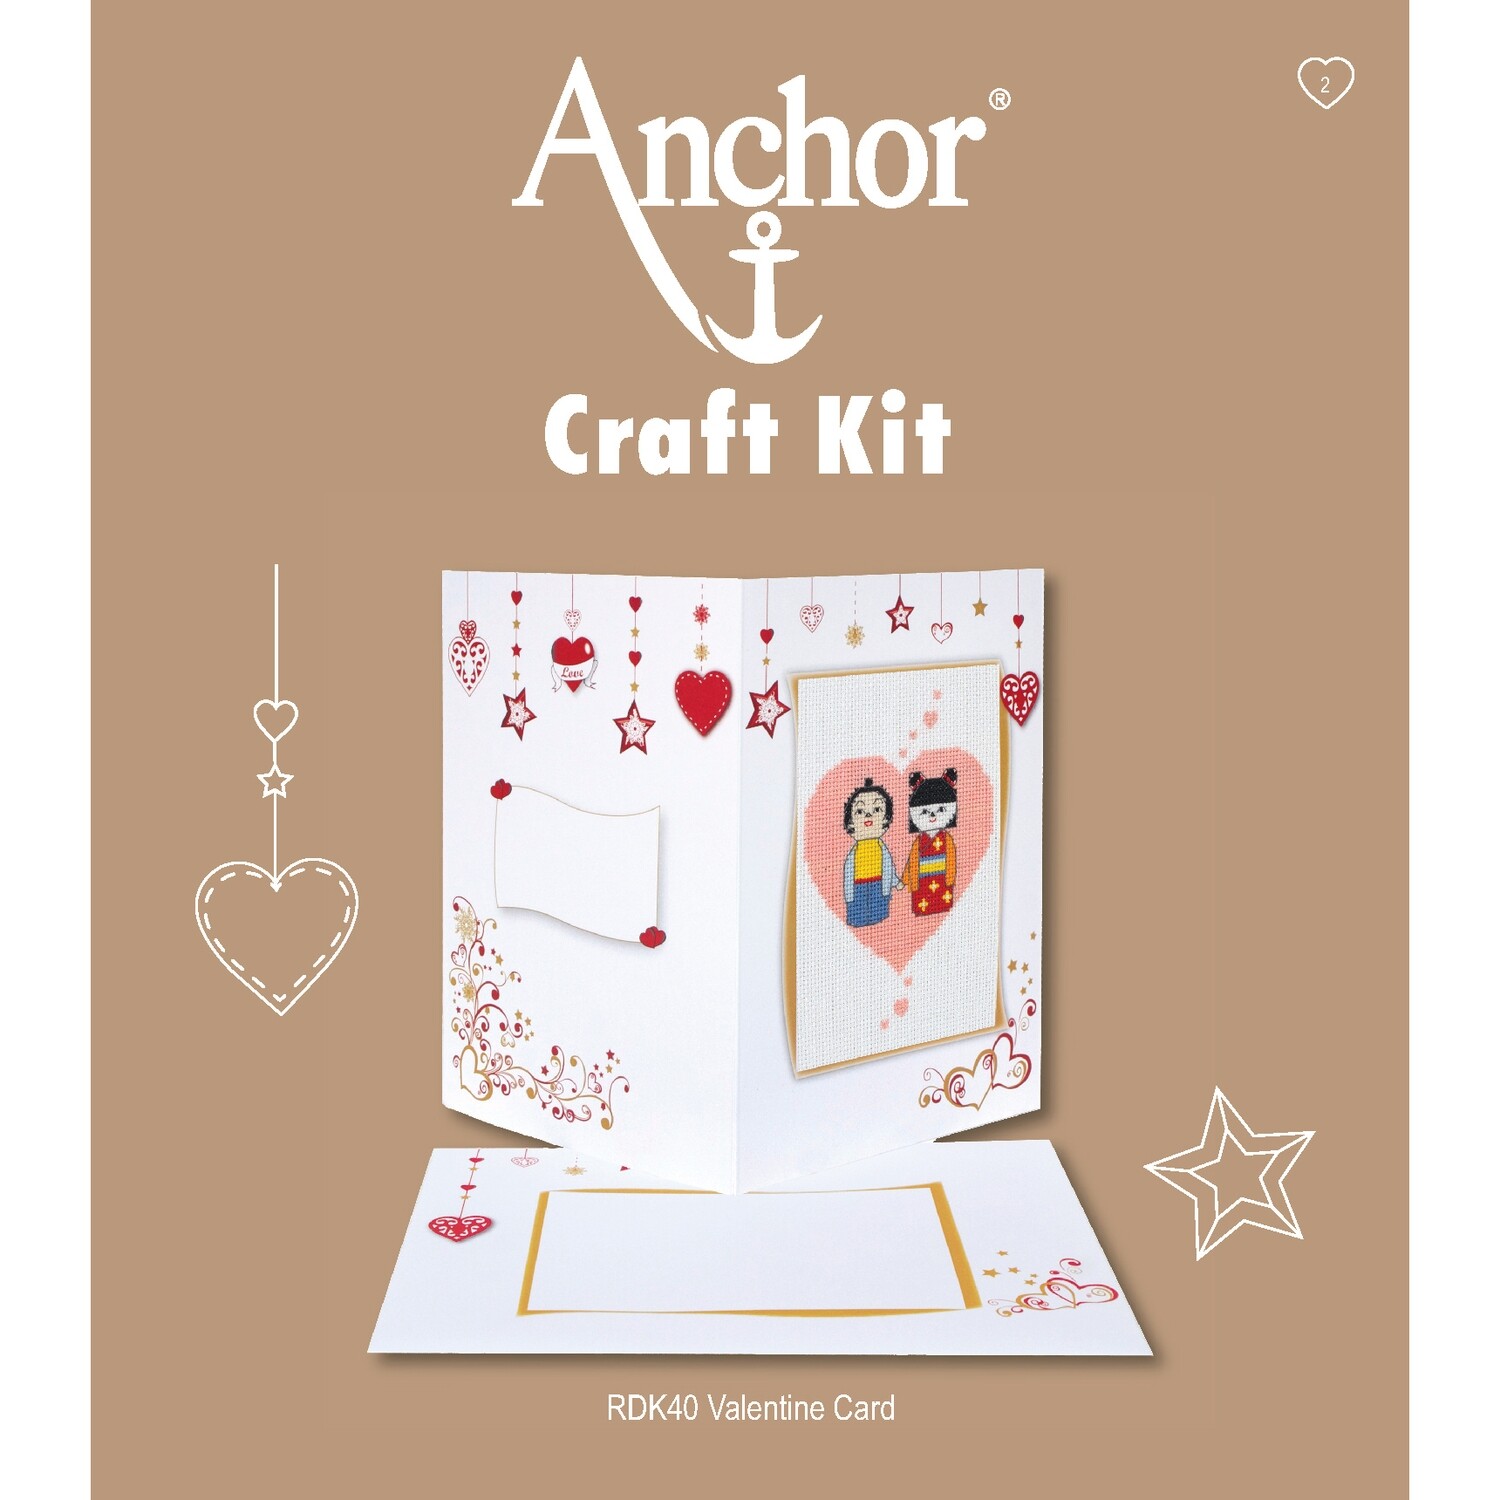 Anchor Craft Kit - Valentine Card